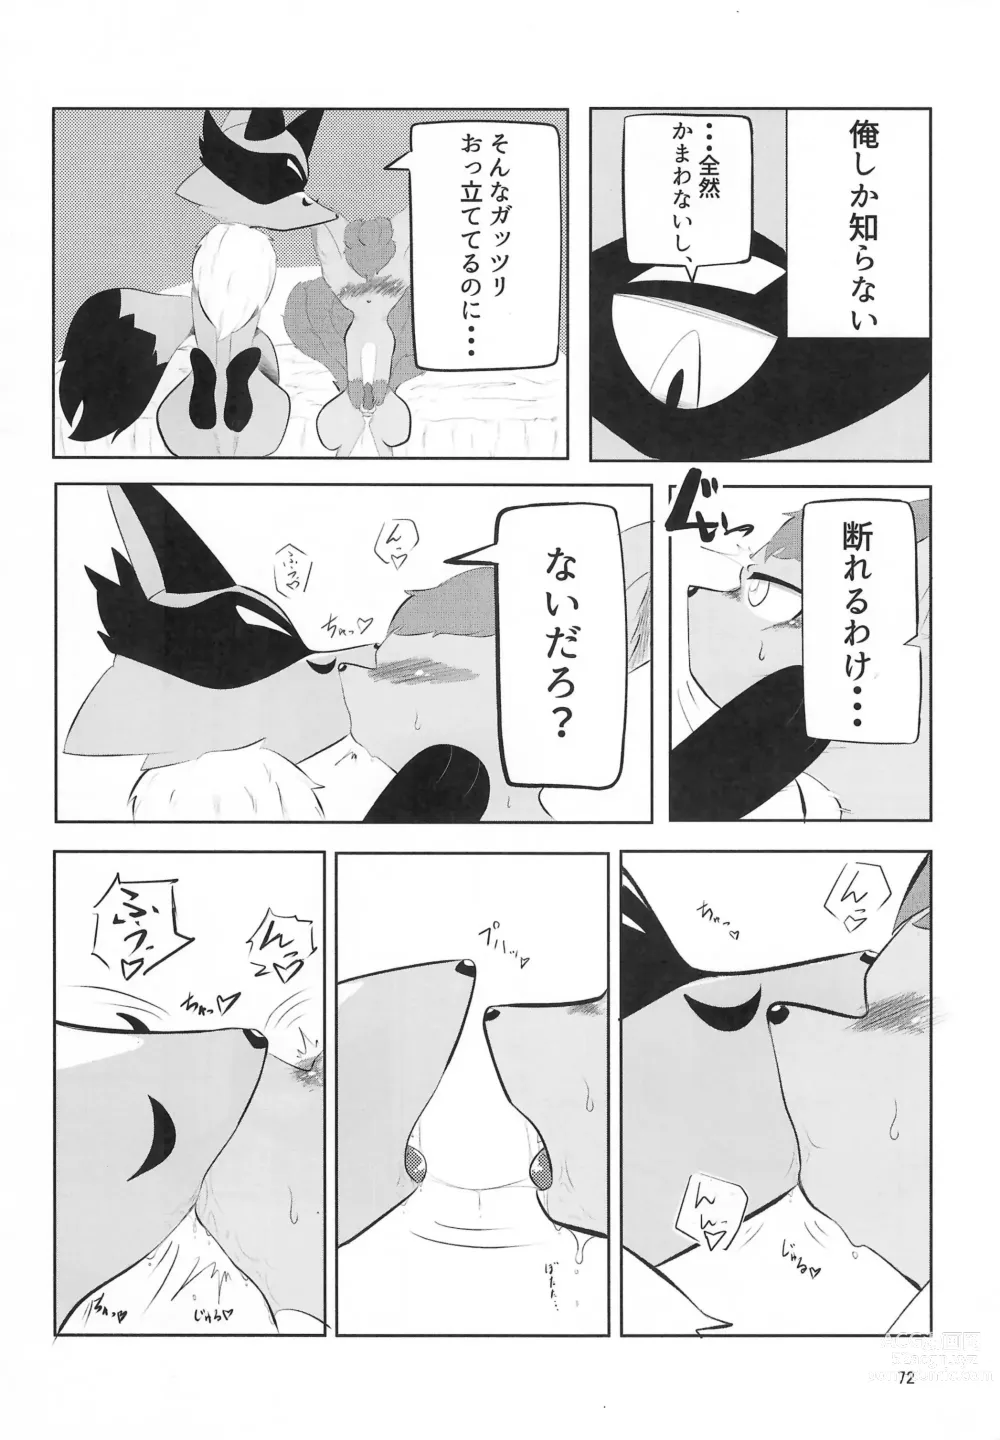 Page 72 of doujinshi Yotsu Ashi BL Anthology K9S